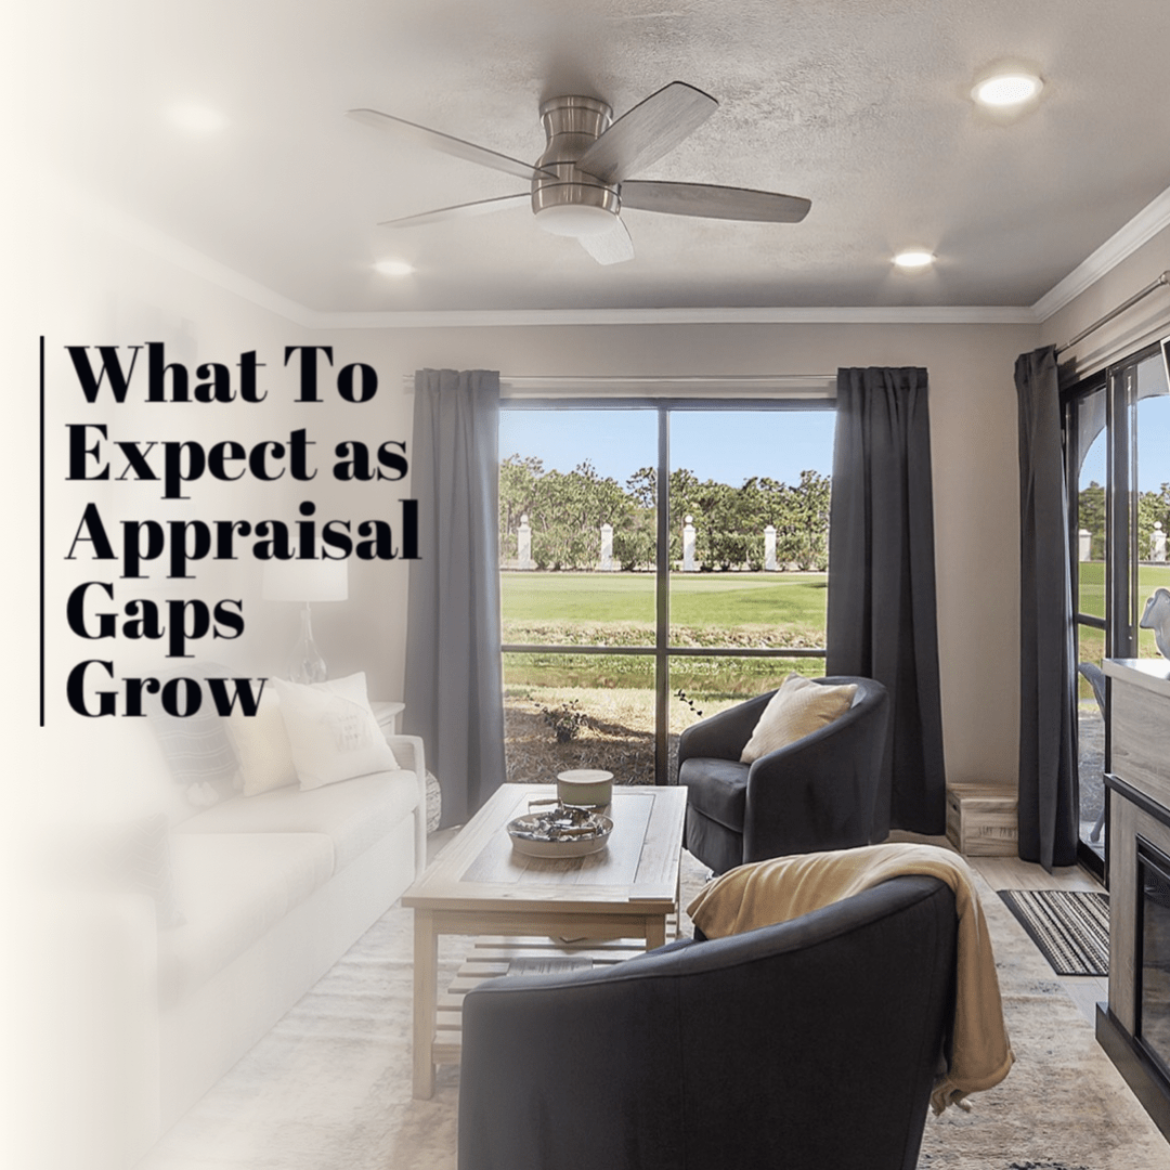 Appraisal Gaps